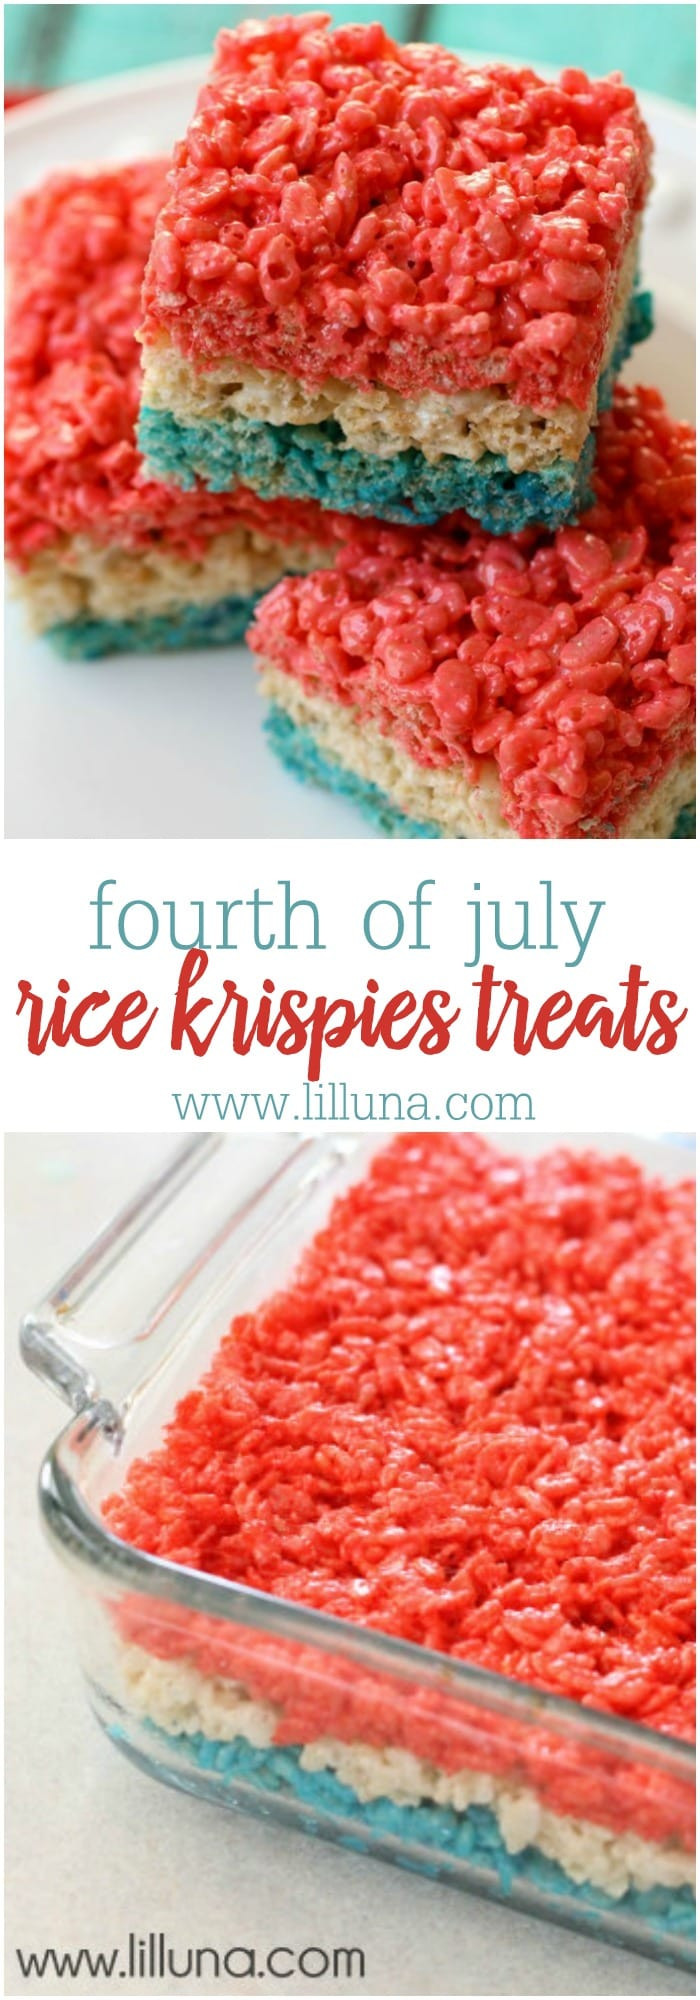 4th Of July Rice Krispie Treats Recipe
 Fourth of July Rice Krispies Treats